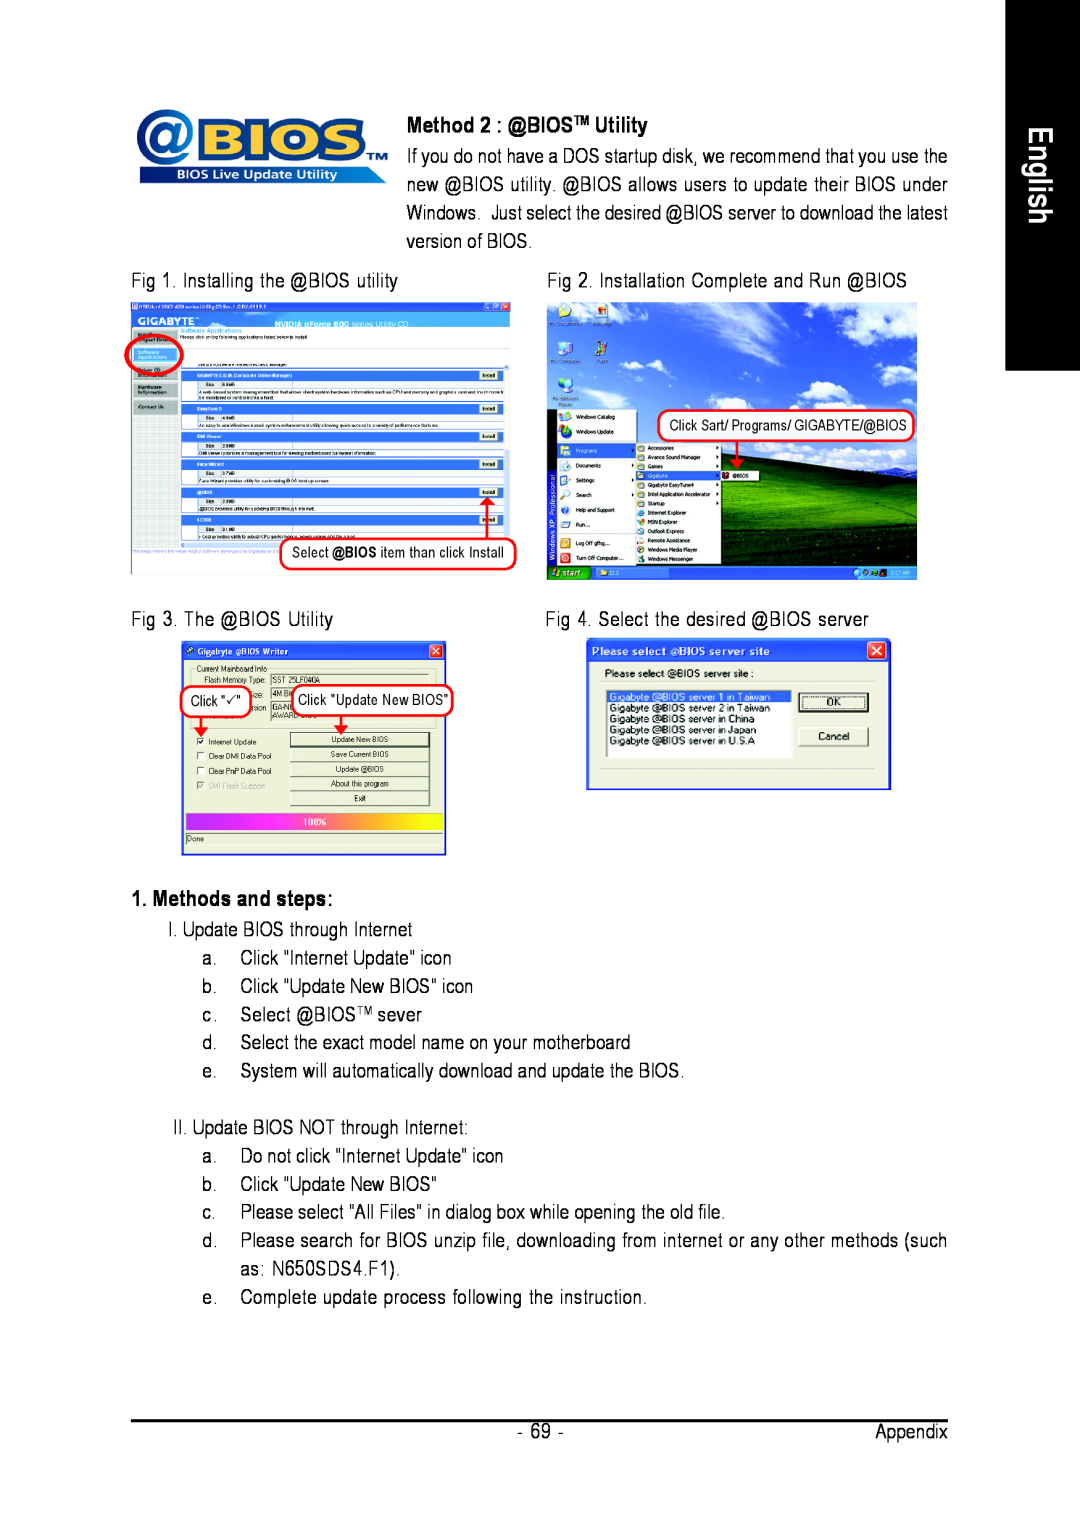 Intel GA-N650SLI-DS4 user manual English, Method 2 @BIOSTM Utility, Methods and steps 